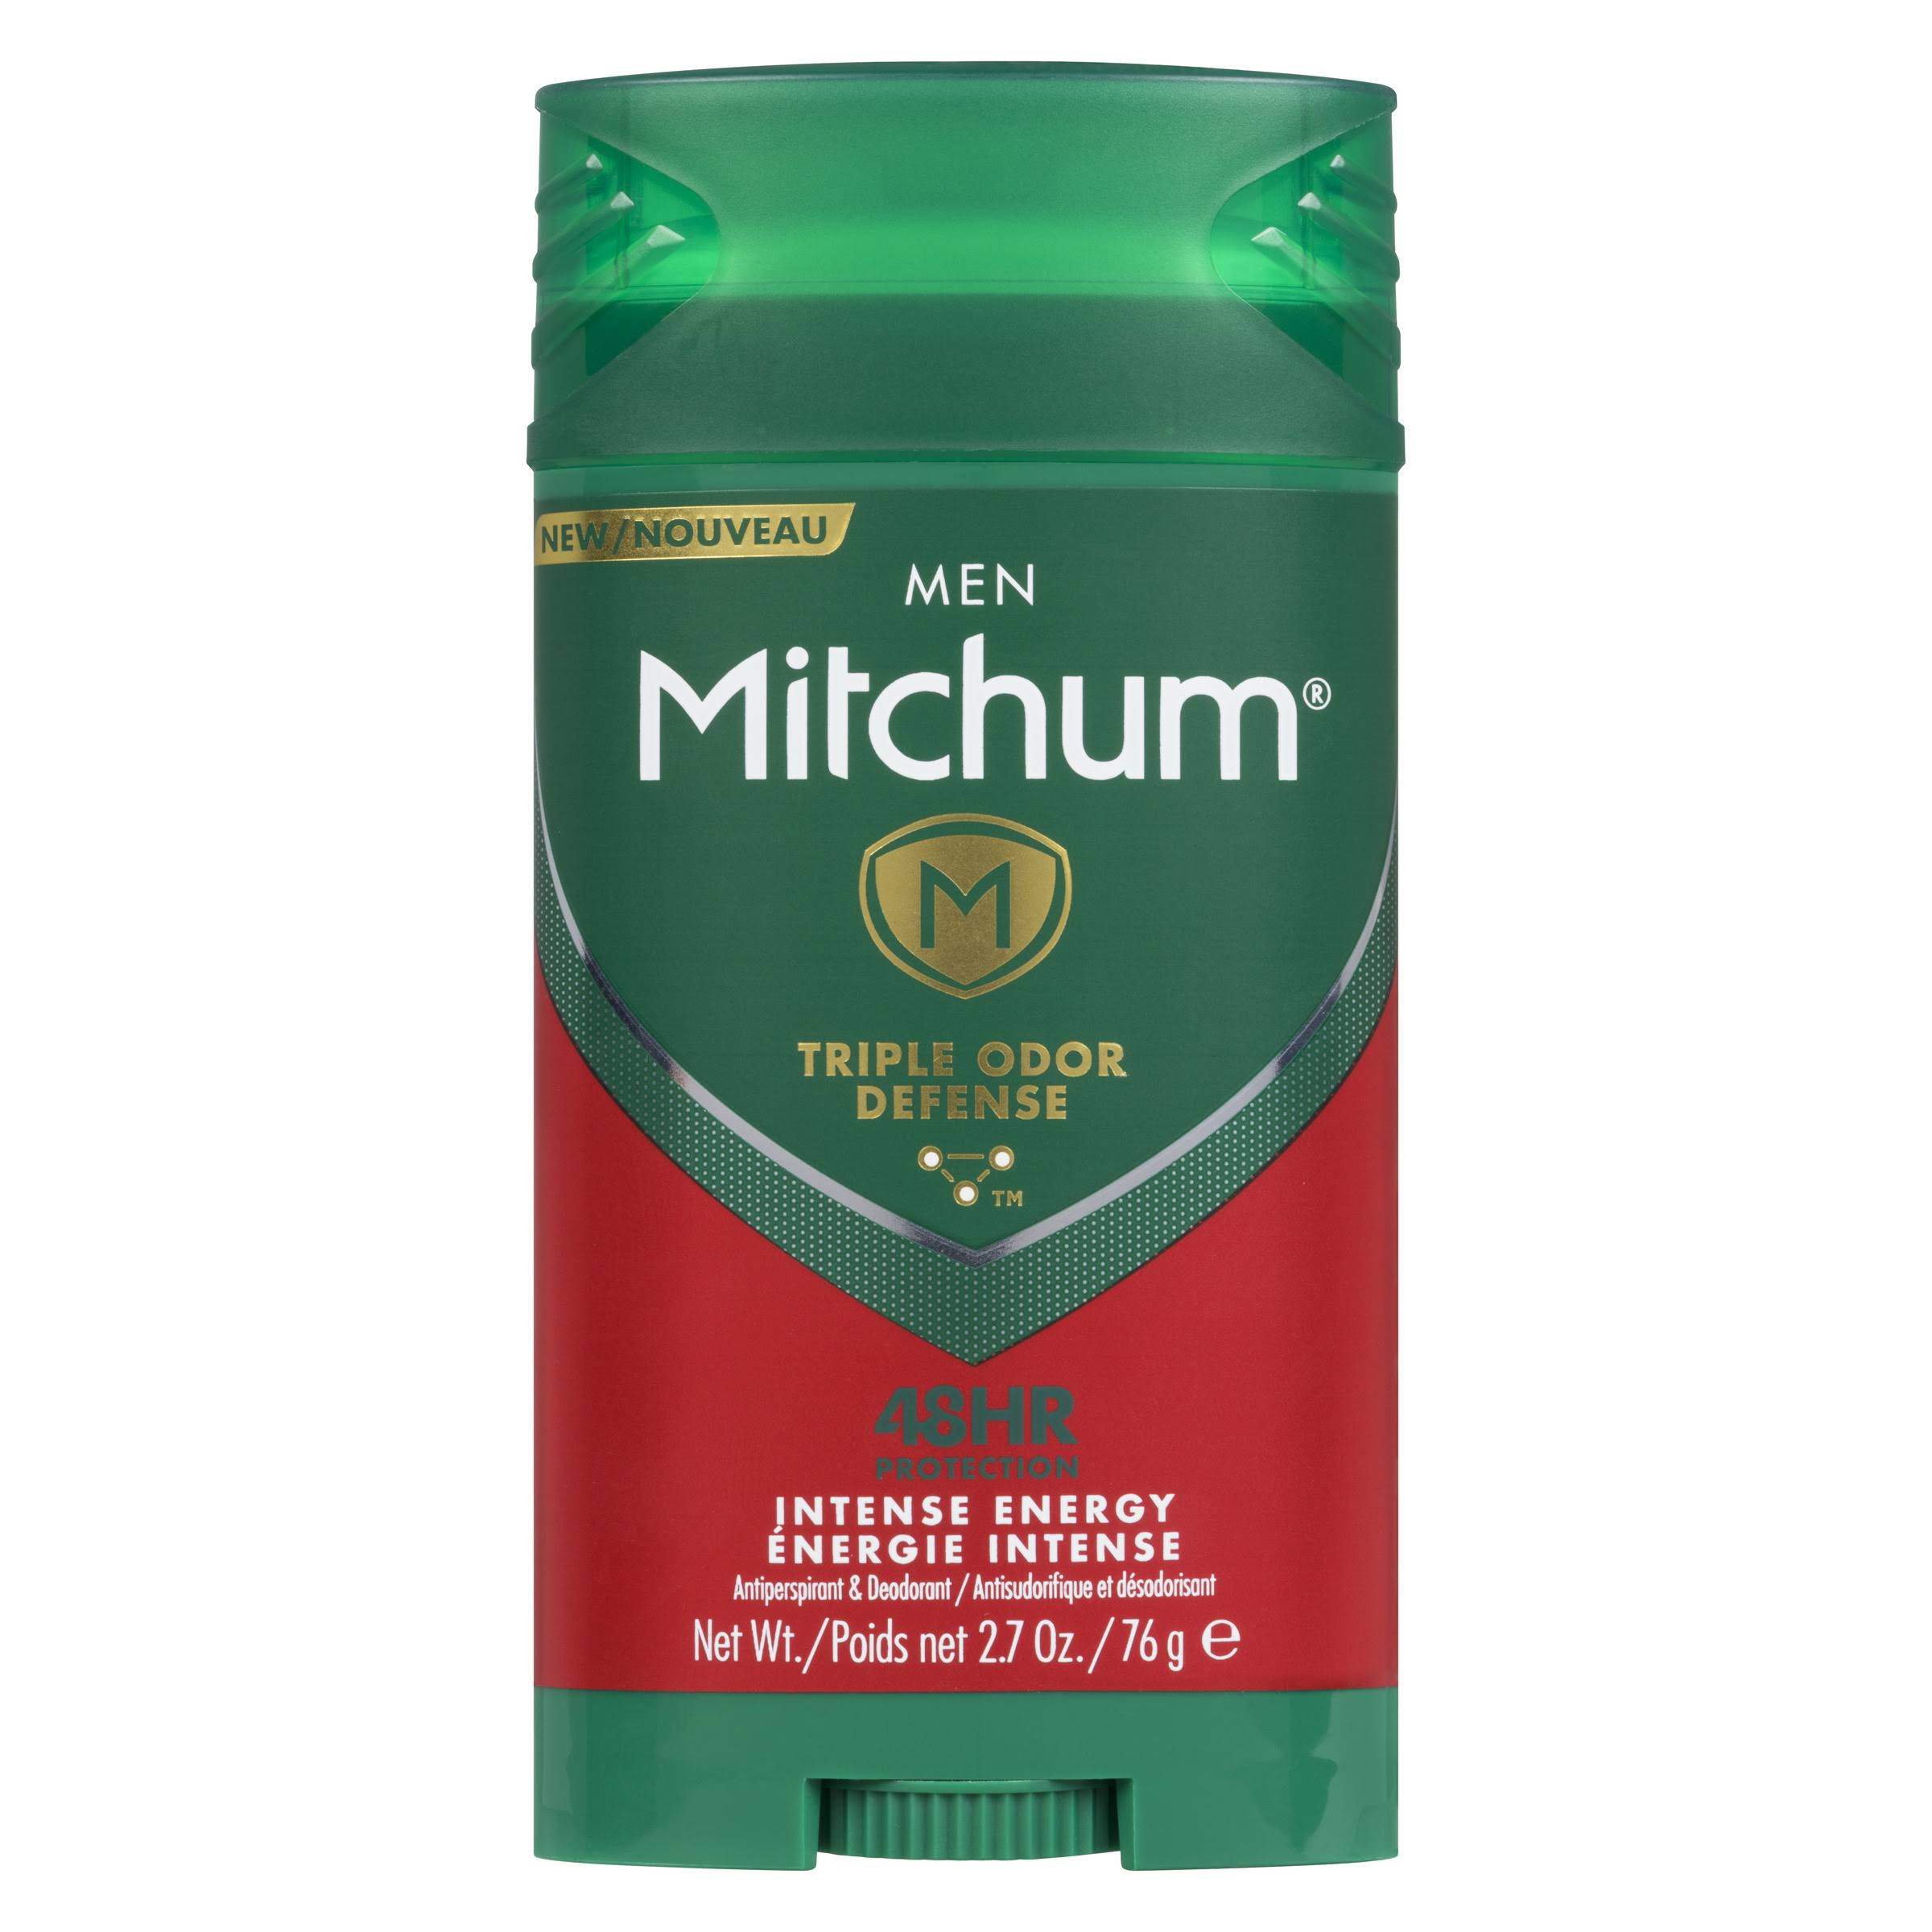 Mitchum® Men Invisible Solid Deodorant - Intense Energy, 76g